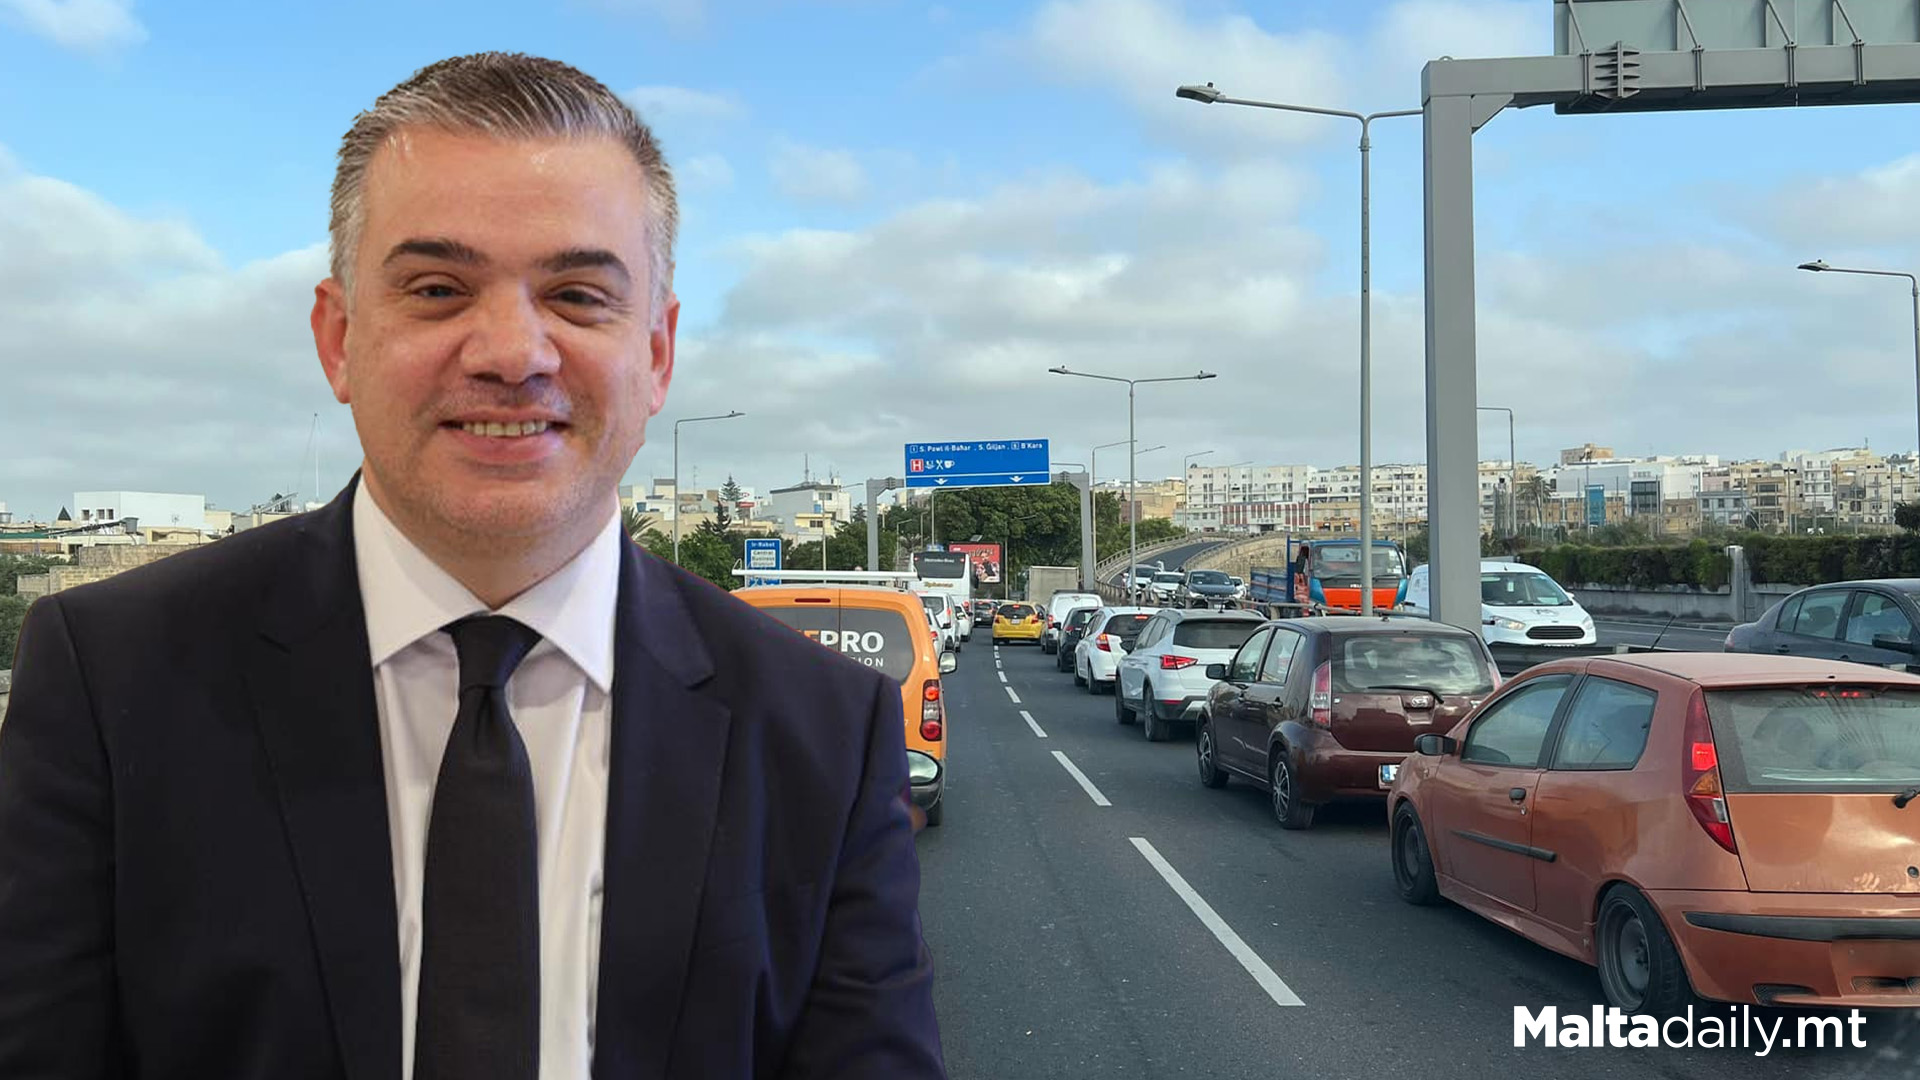 Transport Minister Addresses This Morning's Traffic